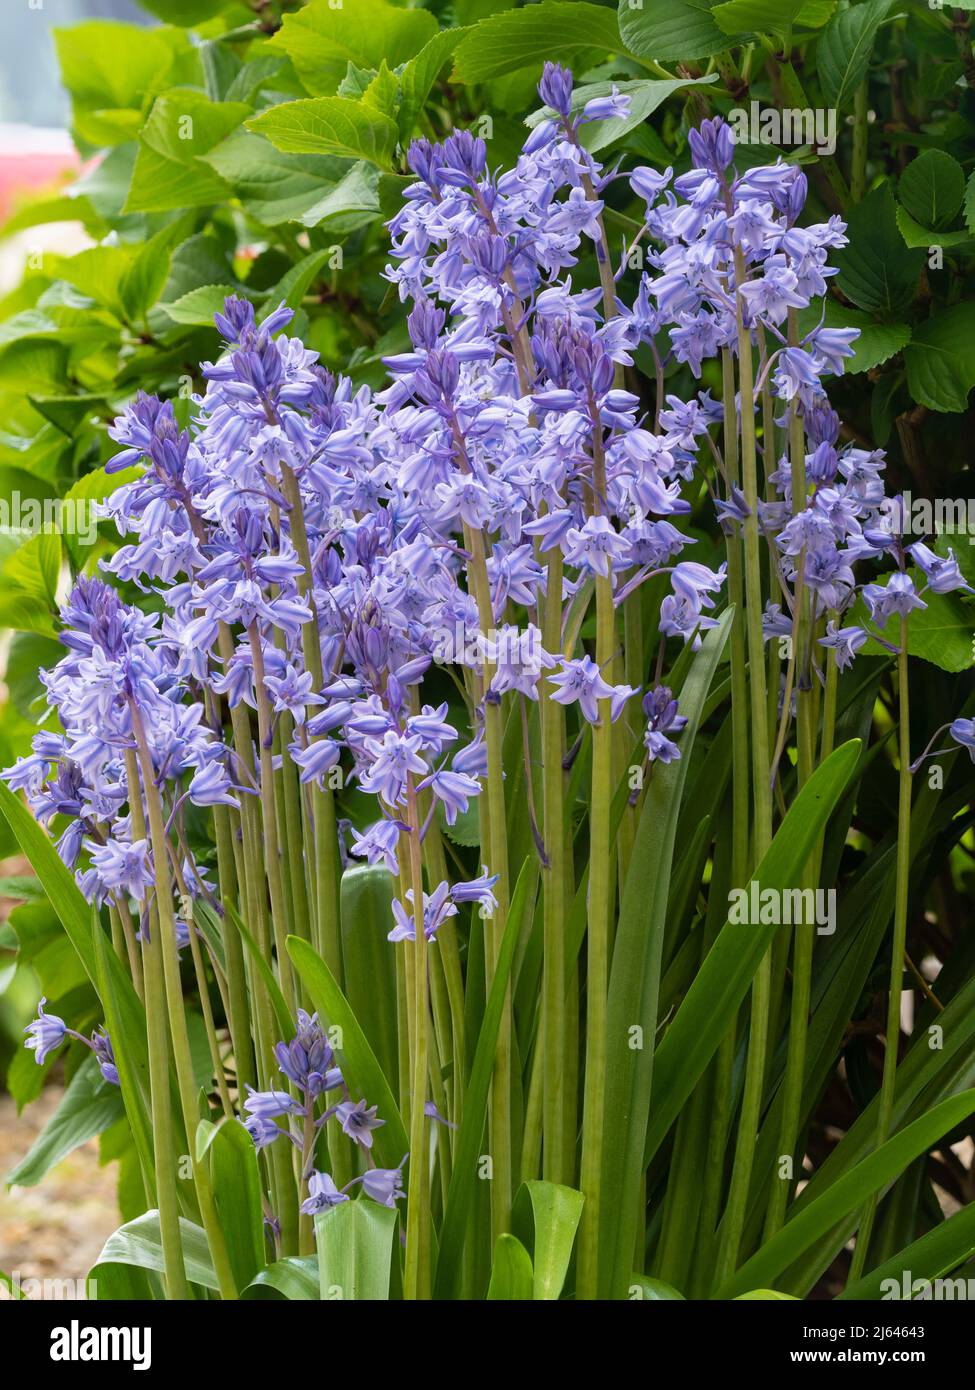 Flores azules a rayas de la vigorosa, florida primavera de bluebell español, Hyacintoides x massartiana Foto de stock